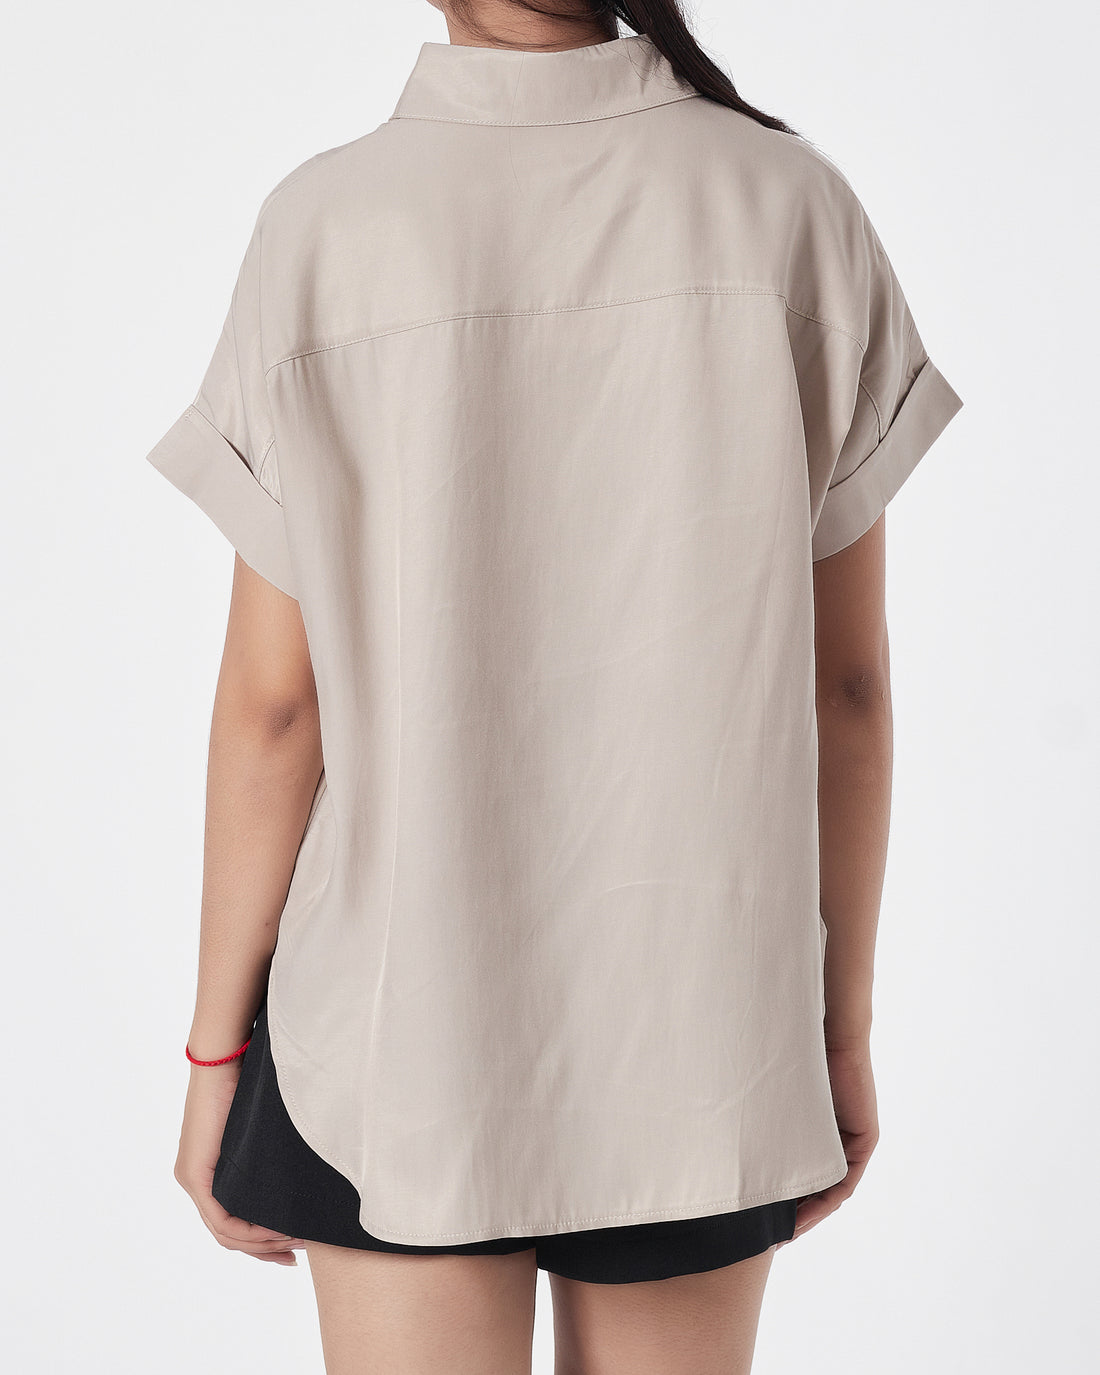 Plain Color Lady Brown Shirts Short Sleeve 13.90